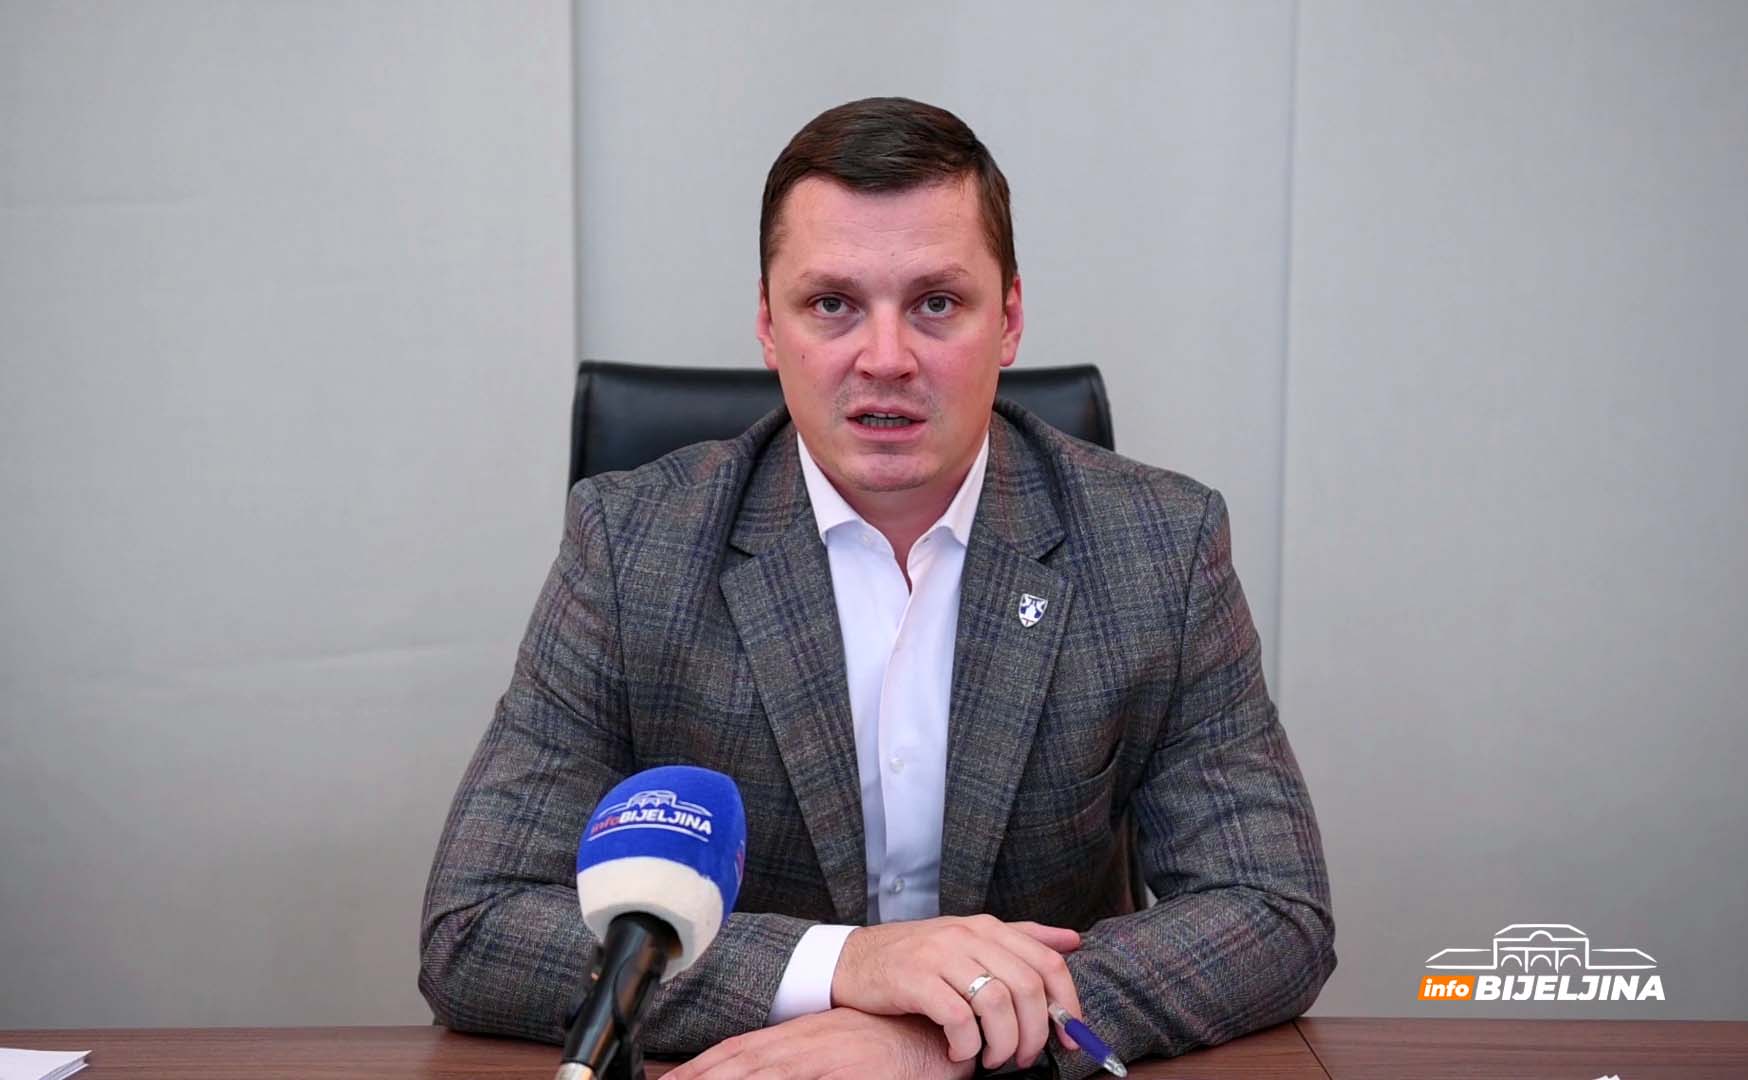 Đurđević: Informacija o stanju u poljoprivredi najvažnija tačka sutrašnjeg zasjedanja (VIDEO)